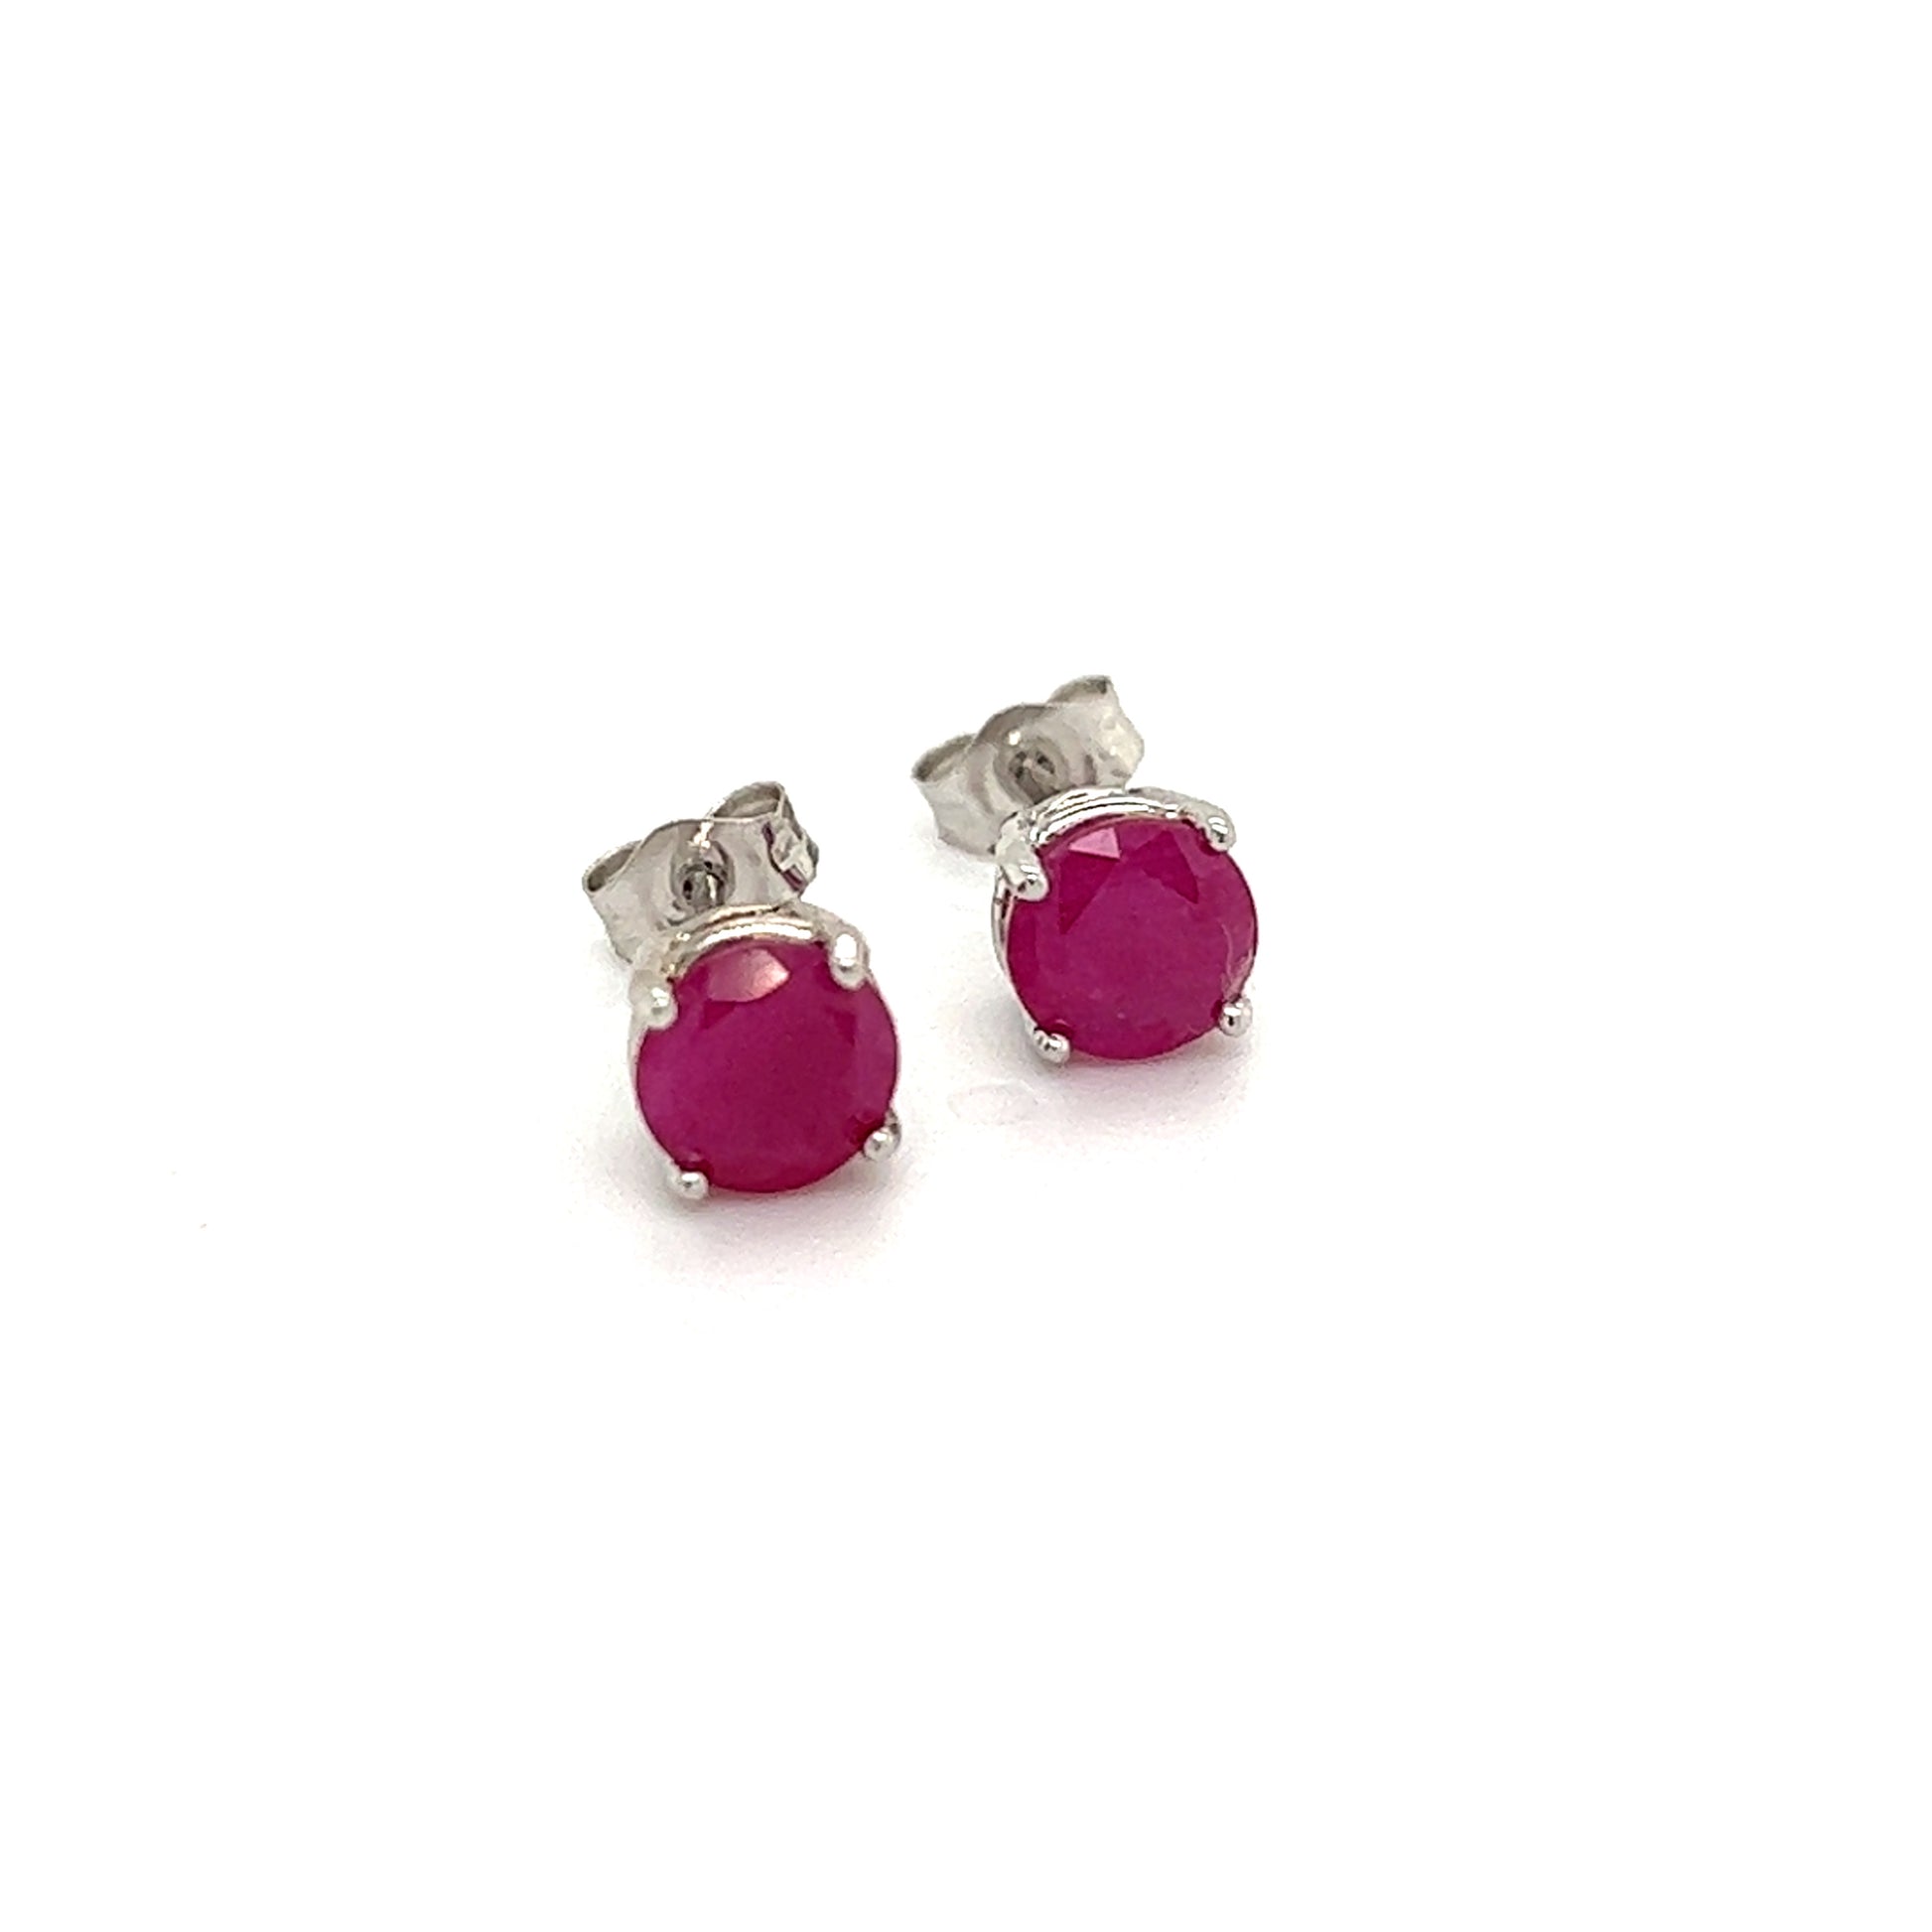 Natural Ruby Stud Earrings 14k Gold 1.91 TCW 1.28 Grams Certified $2,290 210750 - Certified Estate Jewelry